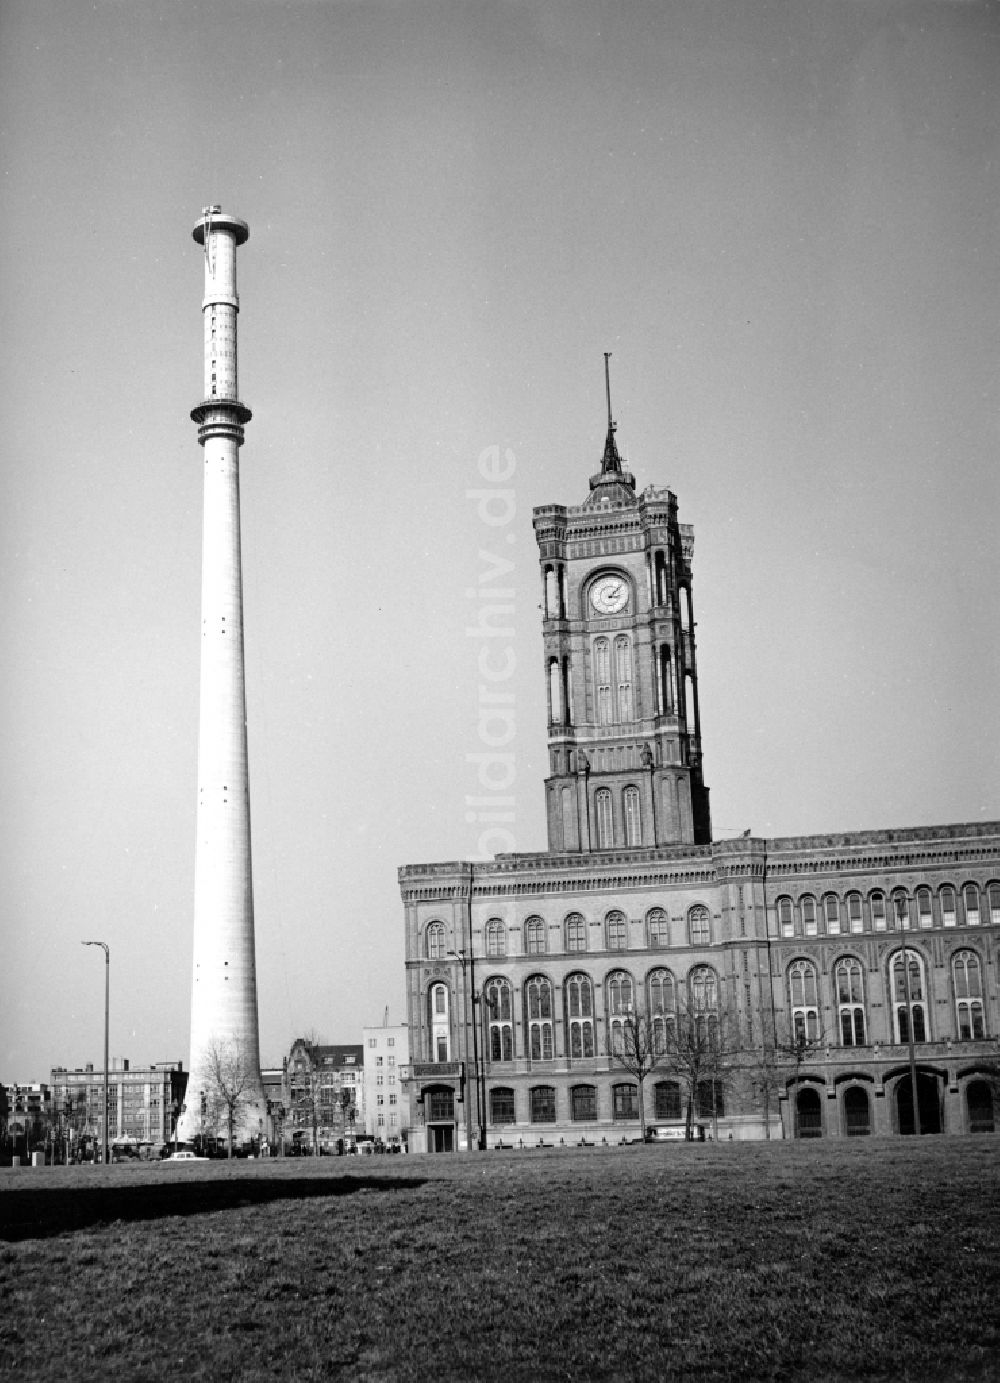 Berlin: Baustelle des Turmbauwerkes Berliner Fernsehturm am Rotes Rathaus in Berlin, der ehemaligen Hauptstadt der DDR, Deutsche Demokratische Republik